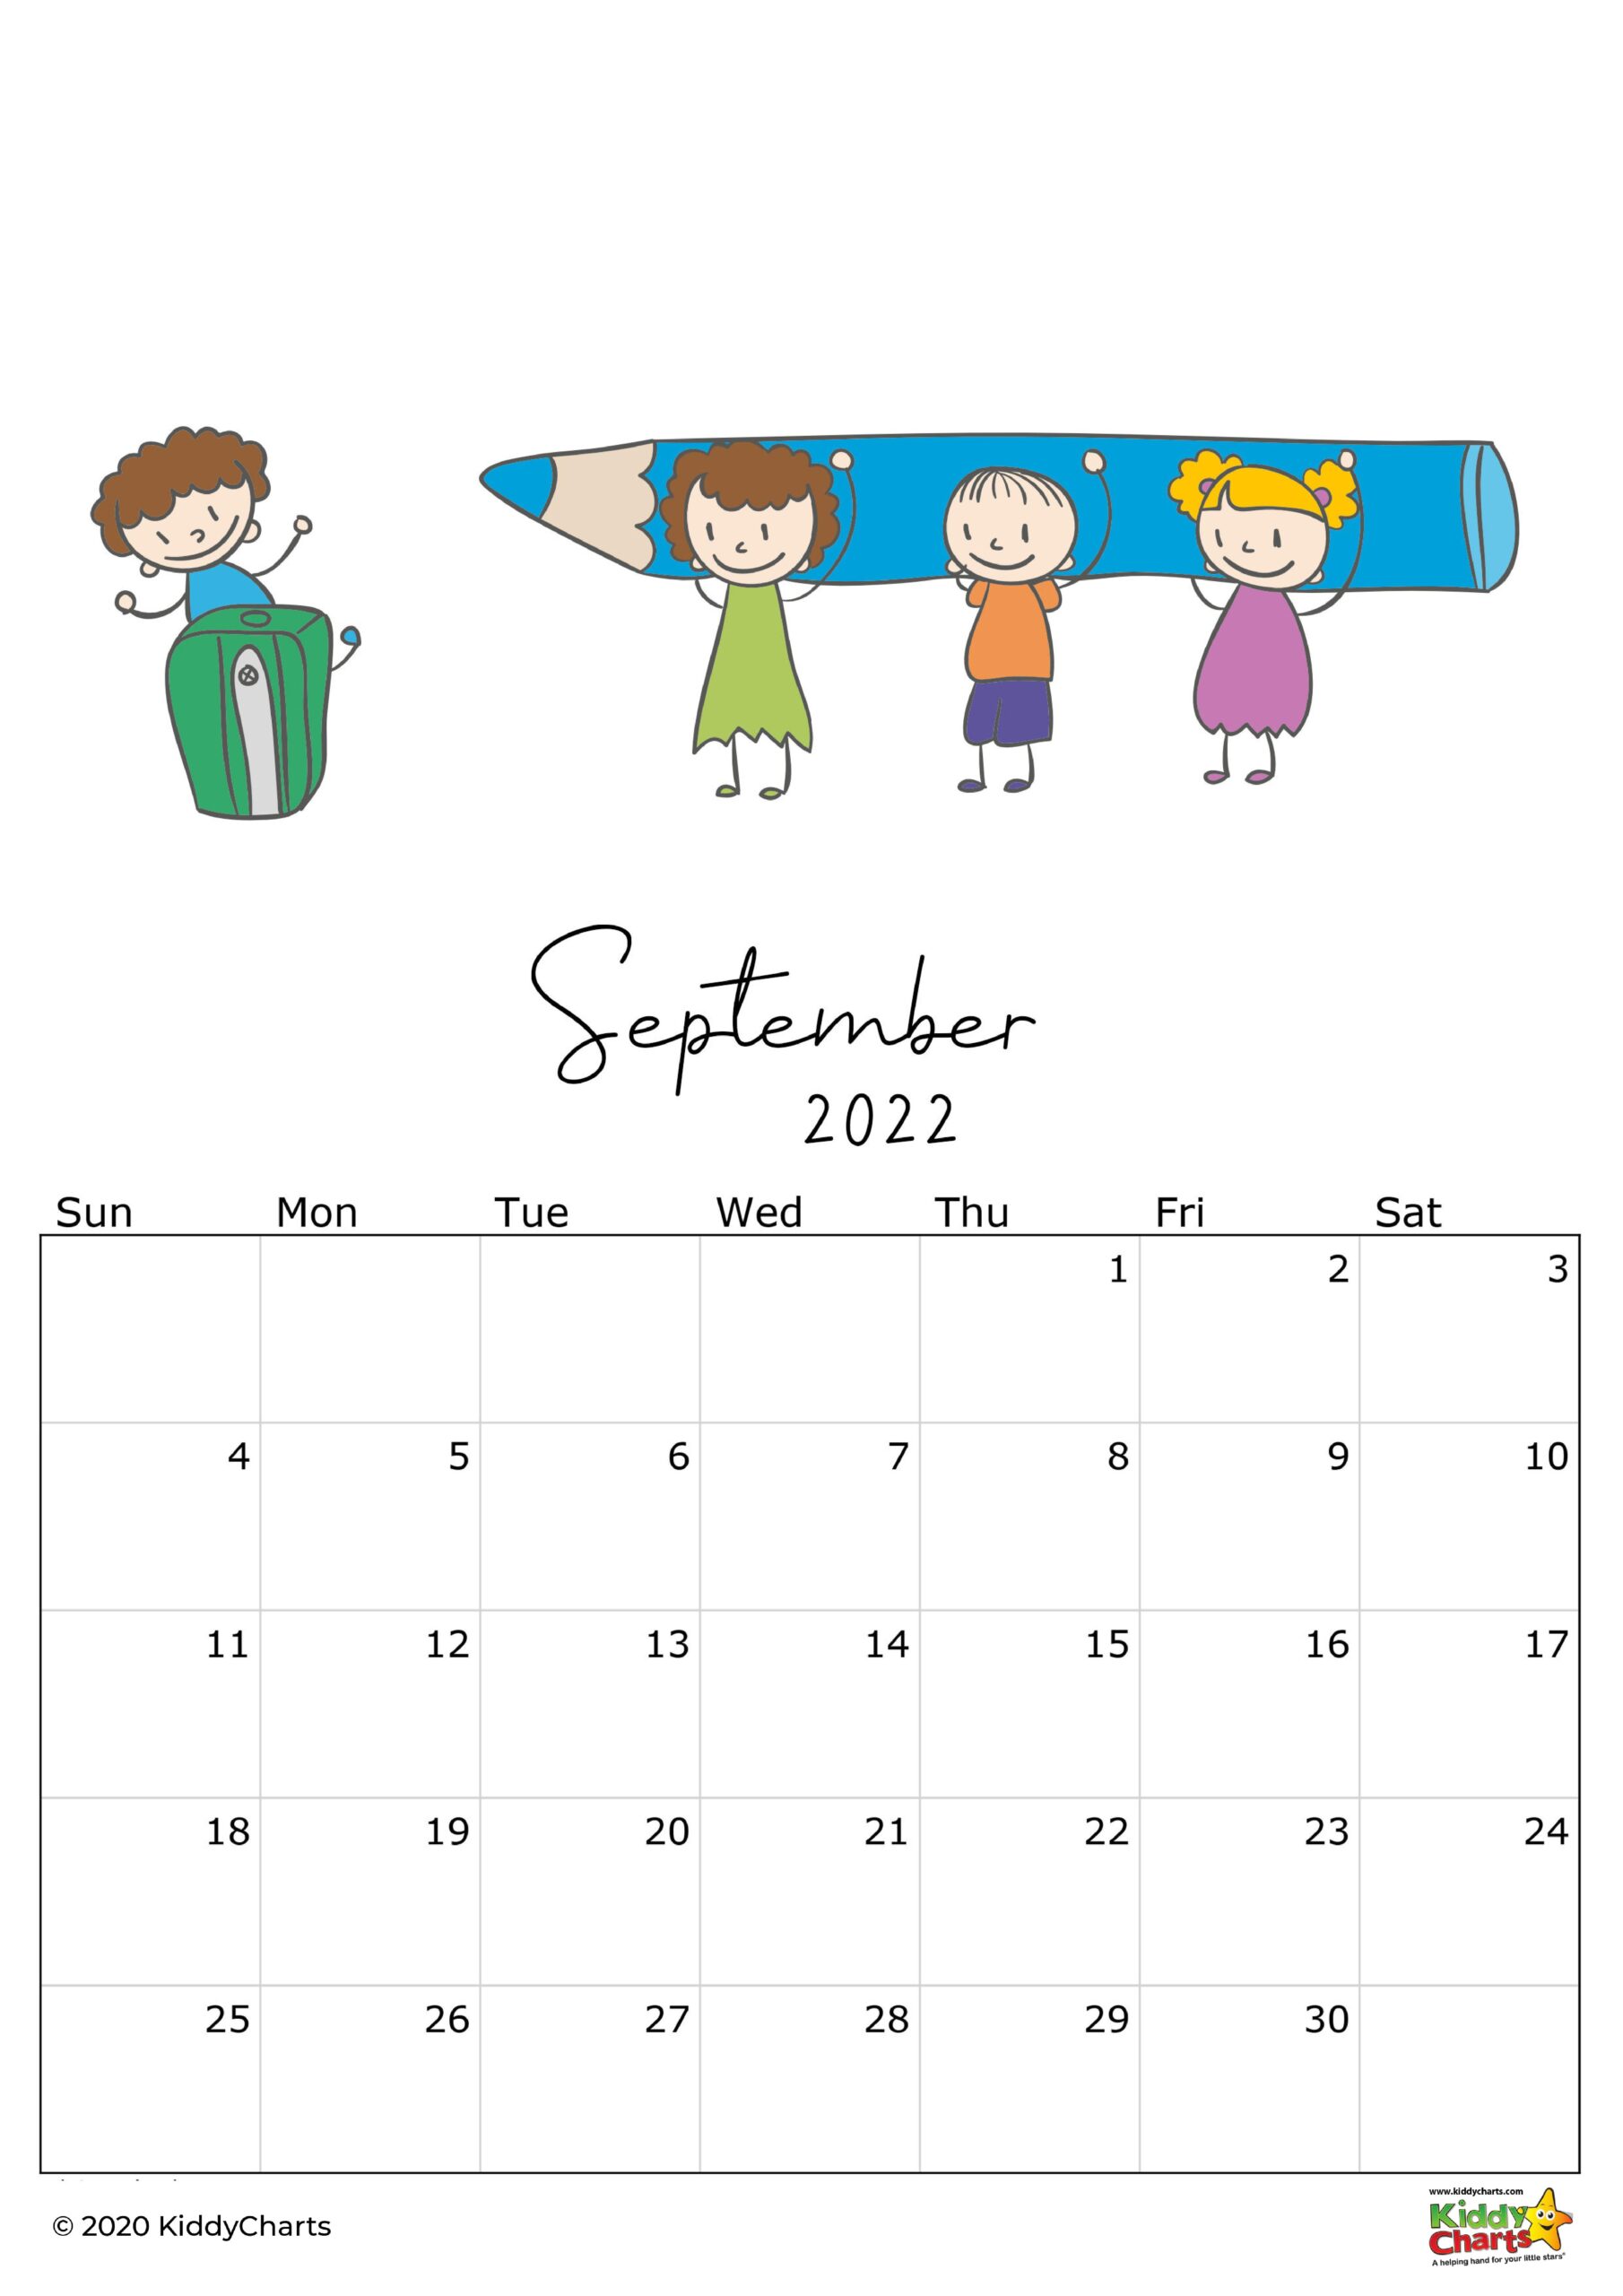 2022 calendar printable free one page